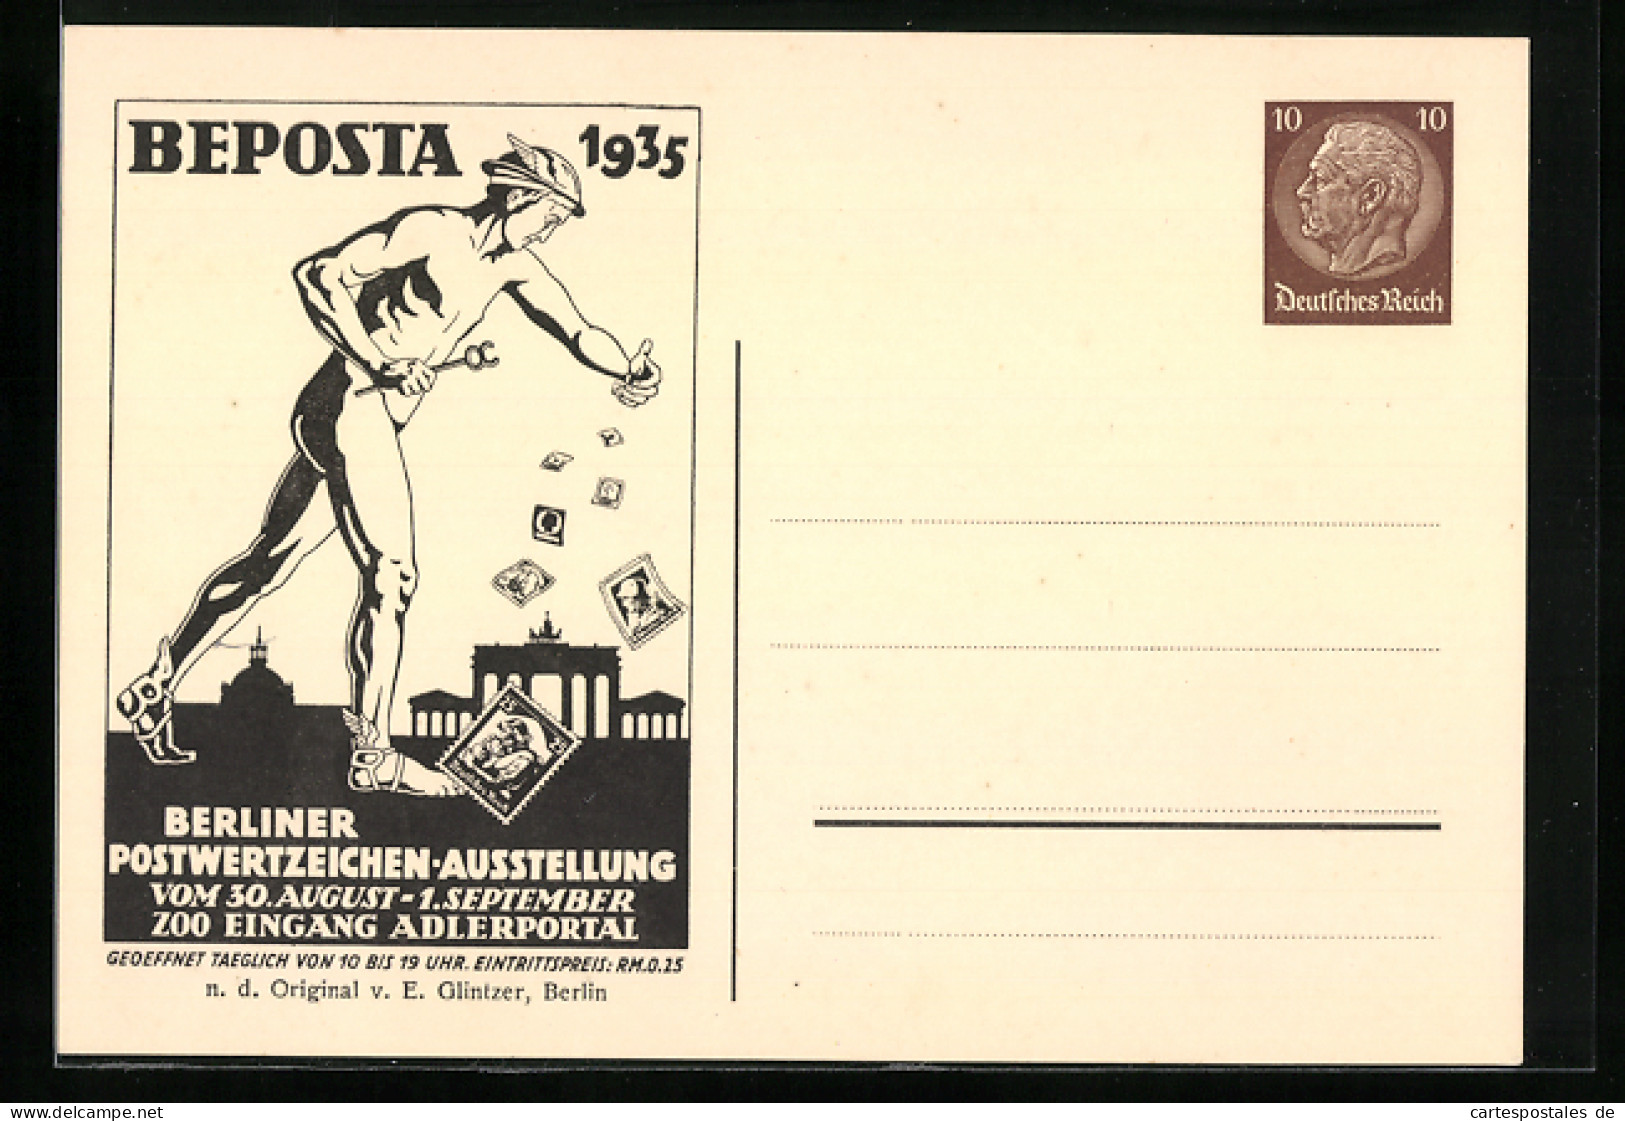 AK Berlin, Berliner Postwertzeichen-Ausstellung Beposta 1935, Ganzsache 10 Pfg.  - Tarjetas